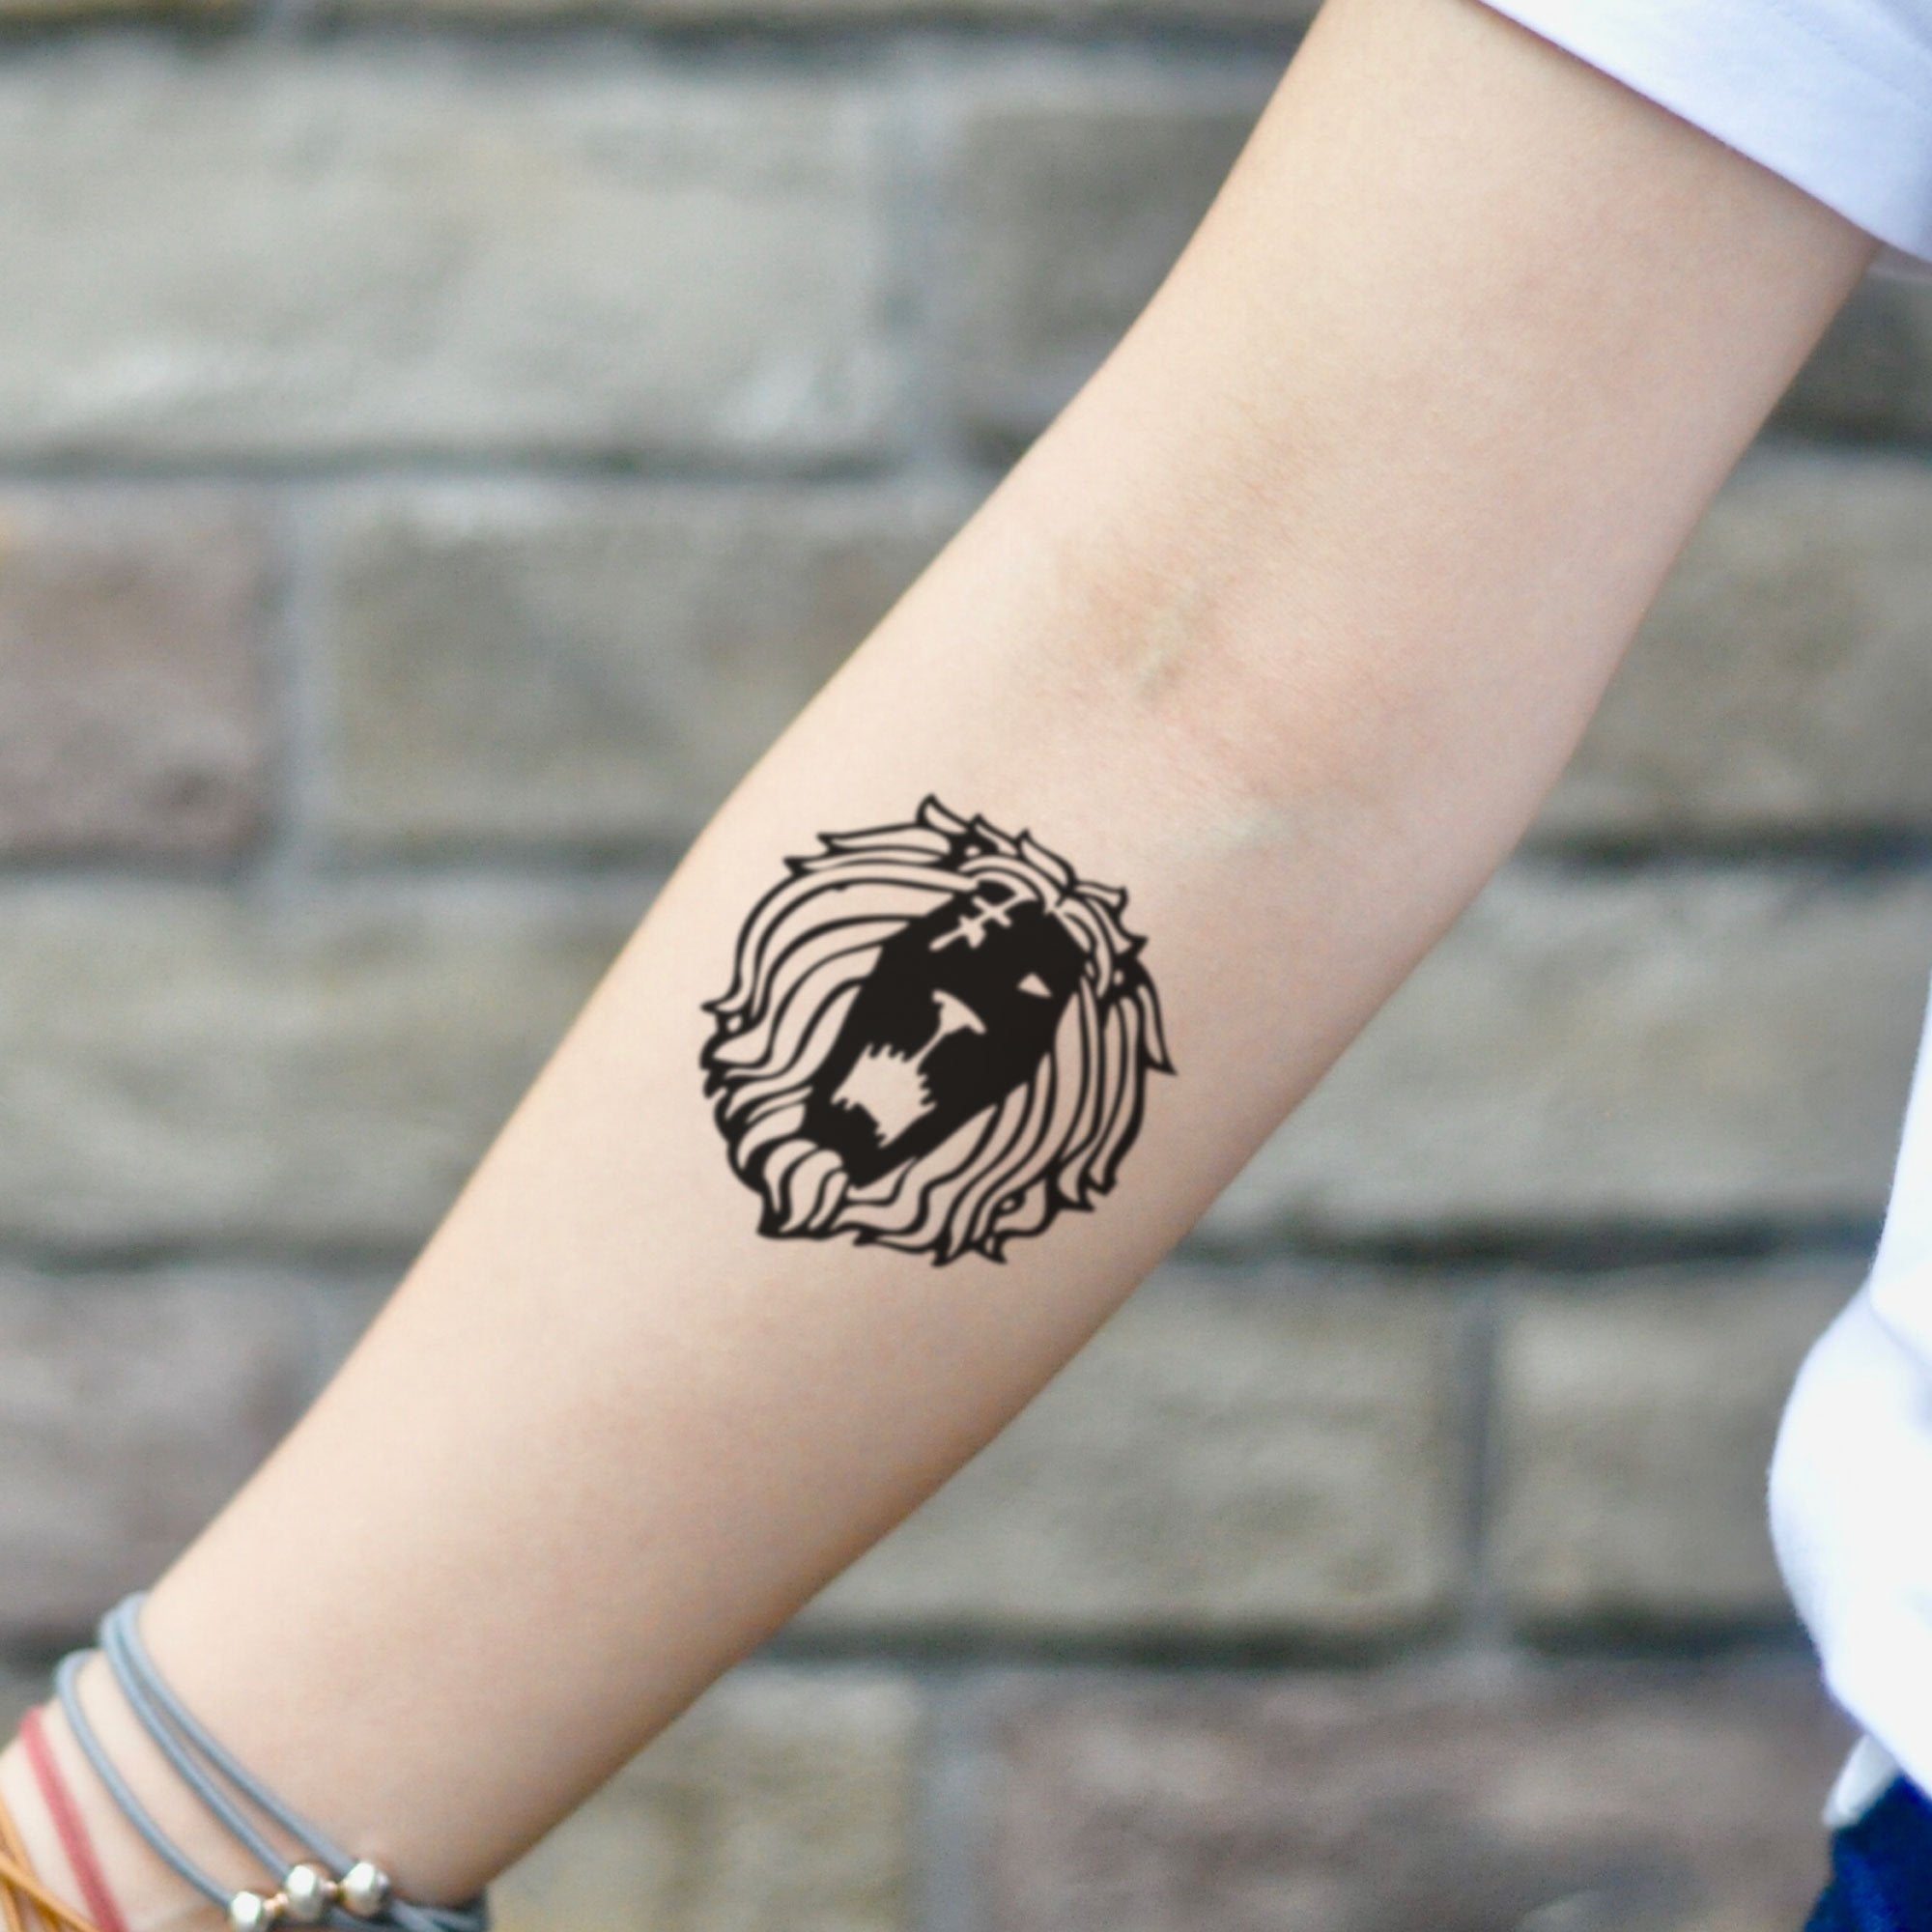 Seven Deadly Sins Temporary Tattoo Sticker - OhMyTat